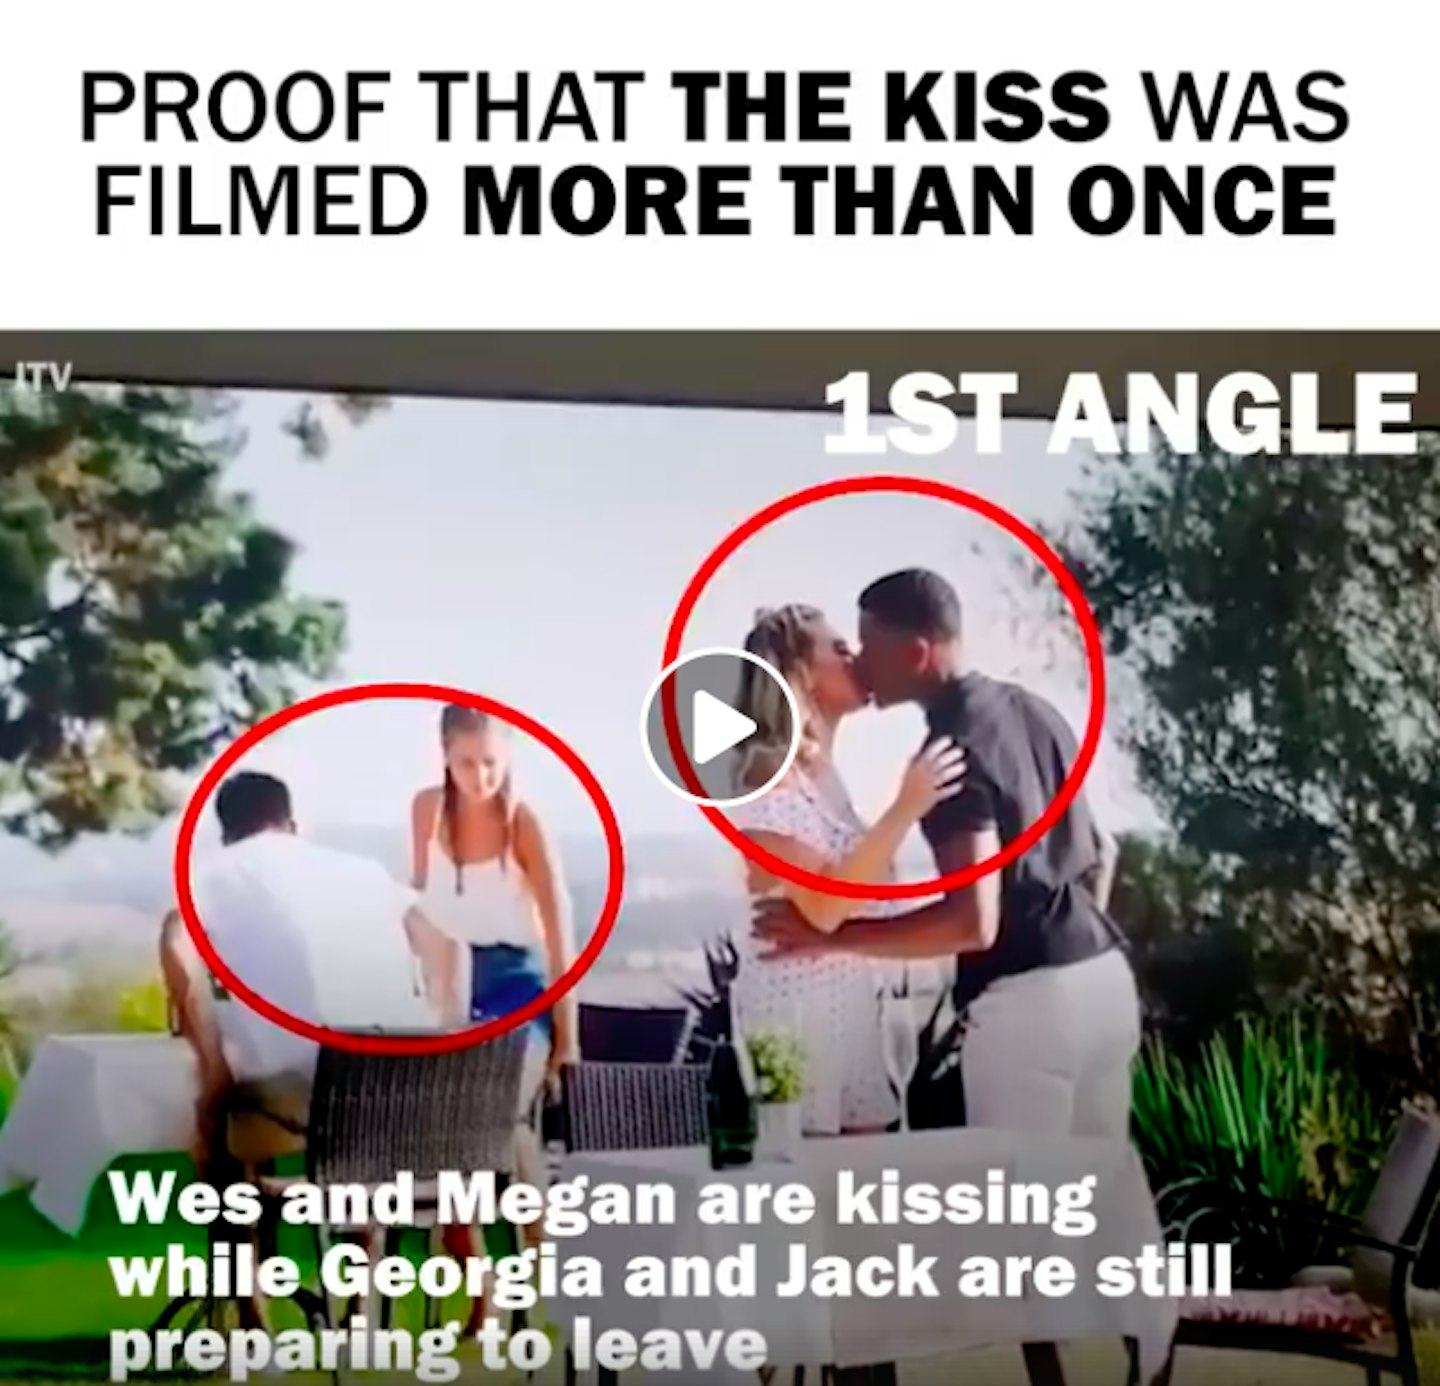 jack georgia kiss love island